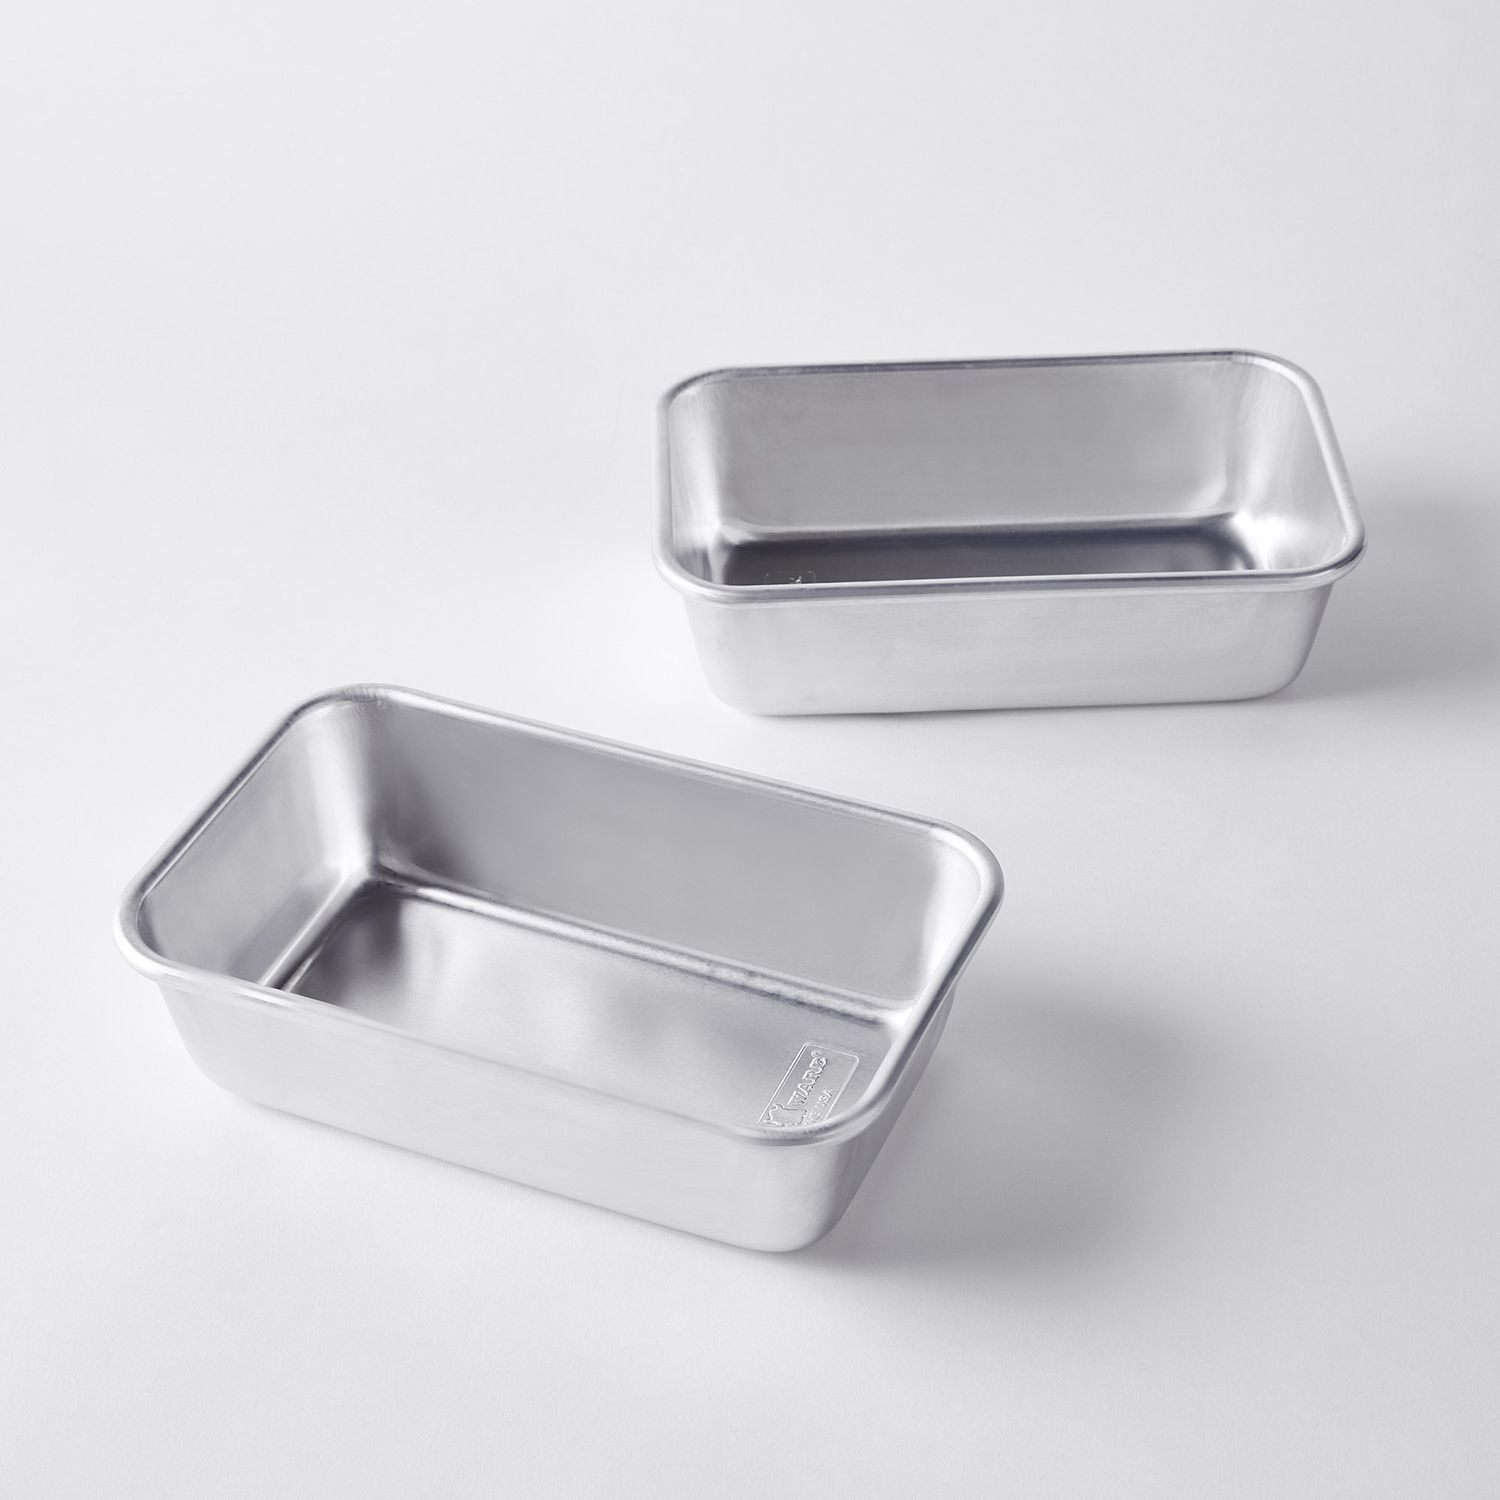 Nordic Ware Naturals Aluminum Loaf Pans, Set of 2, 1.5 Pound on Food52